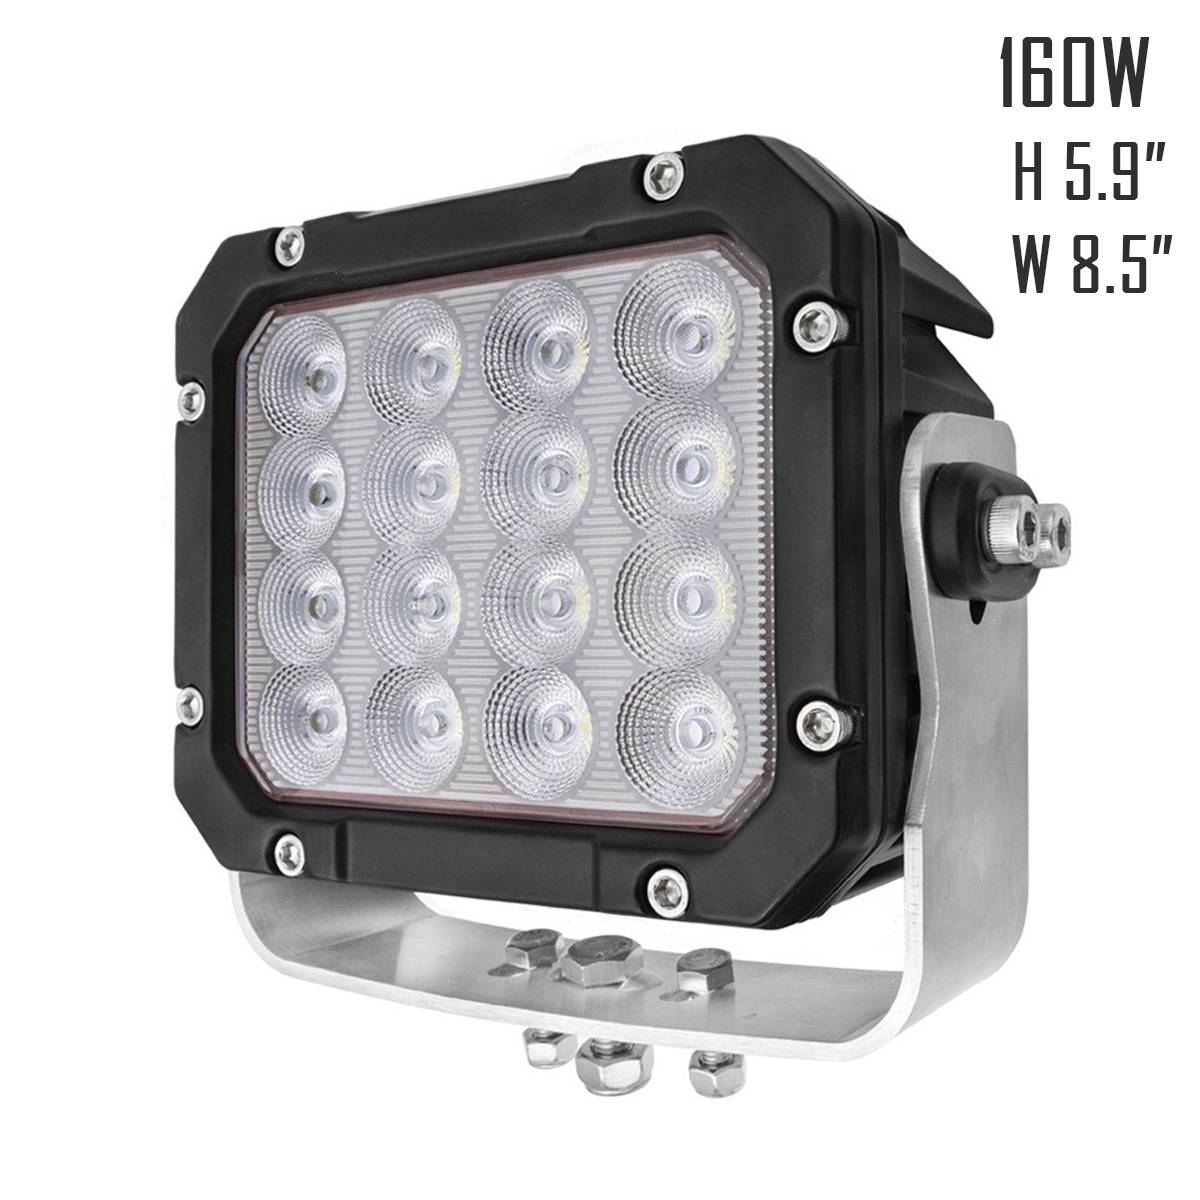 Industrial work light - OW-0807-160W